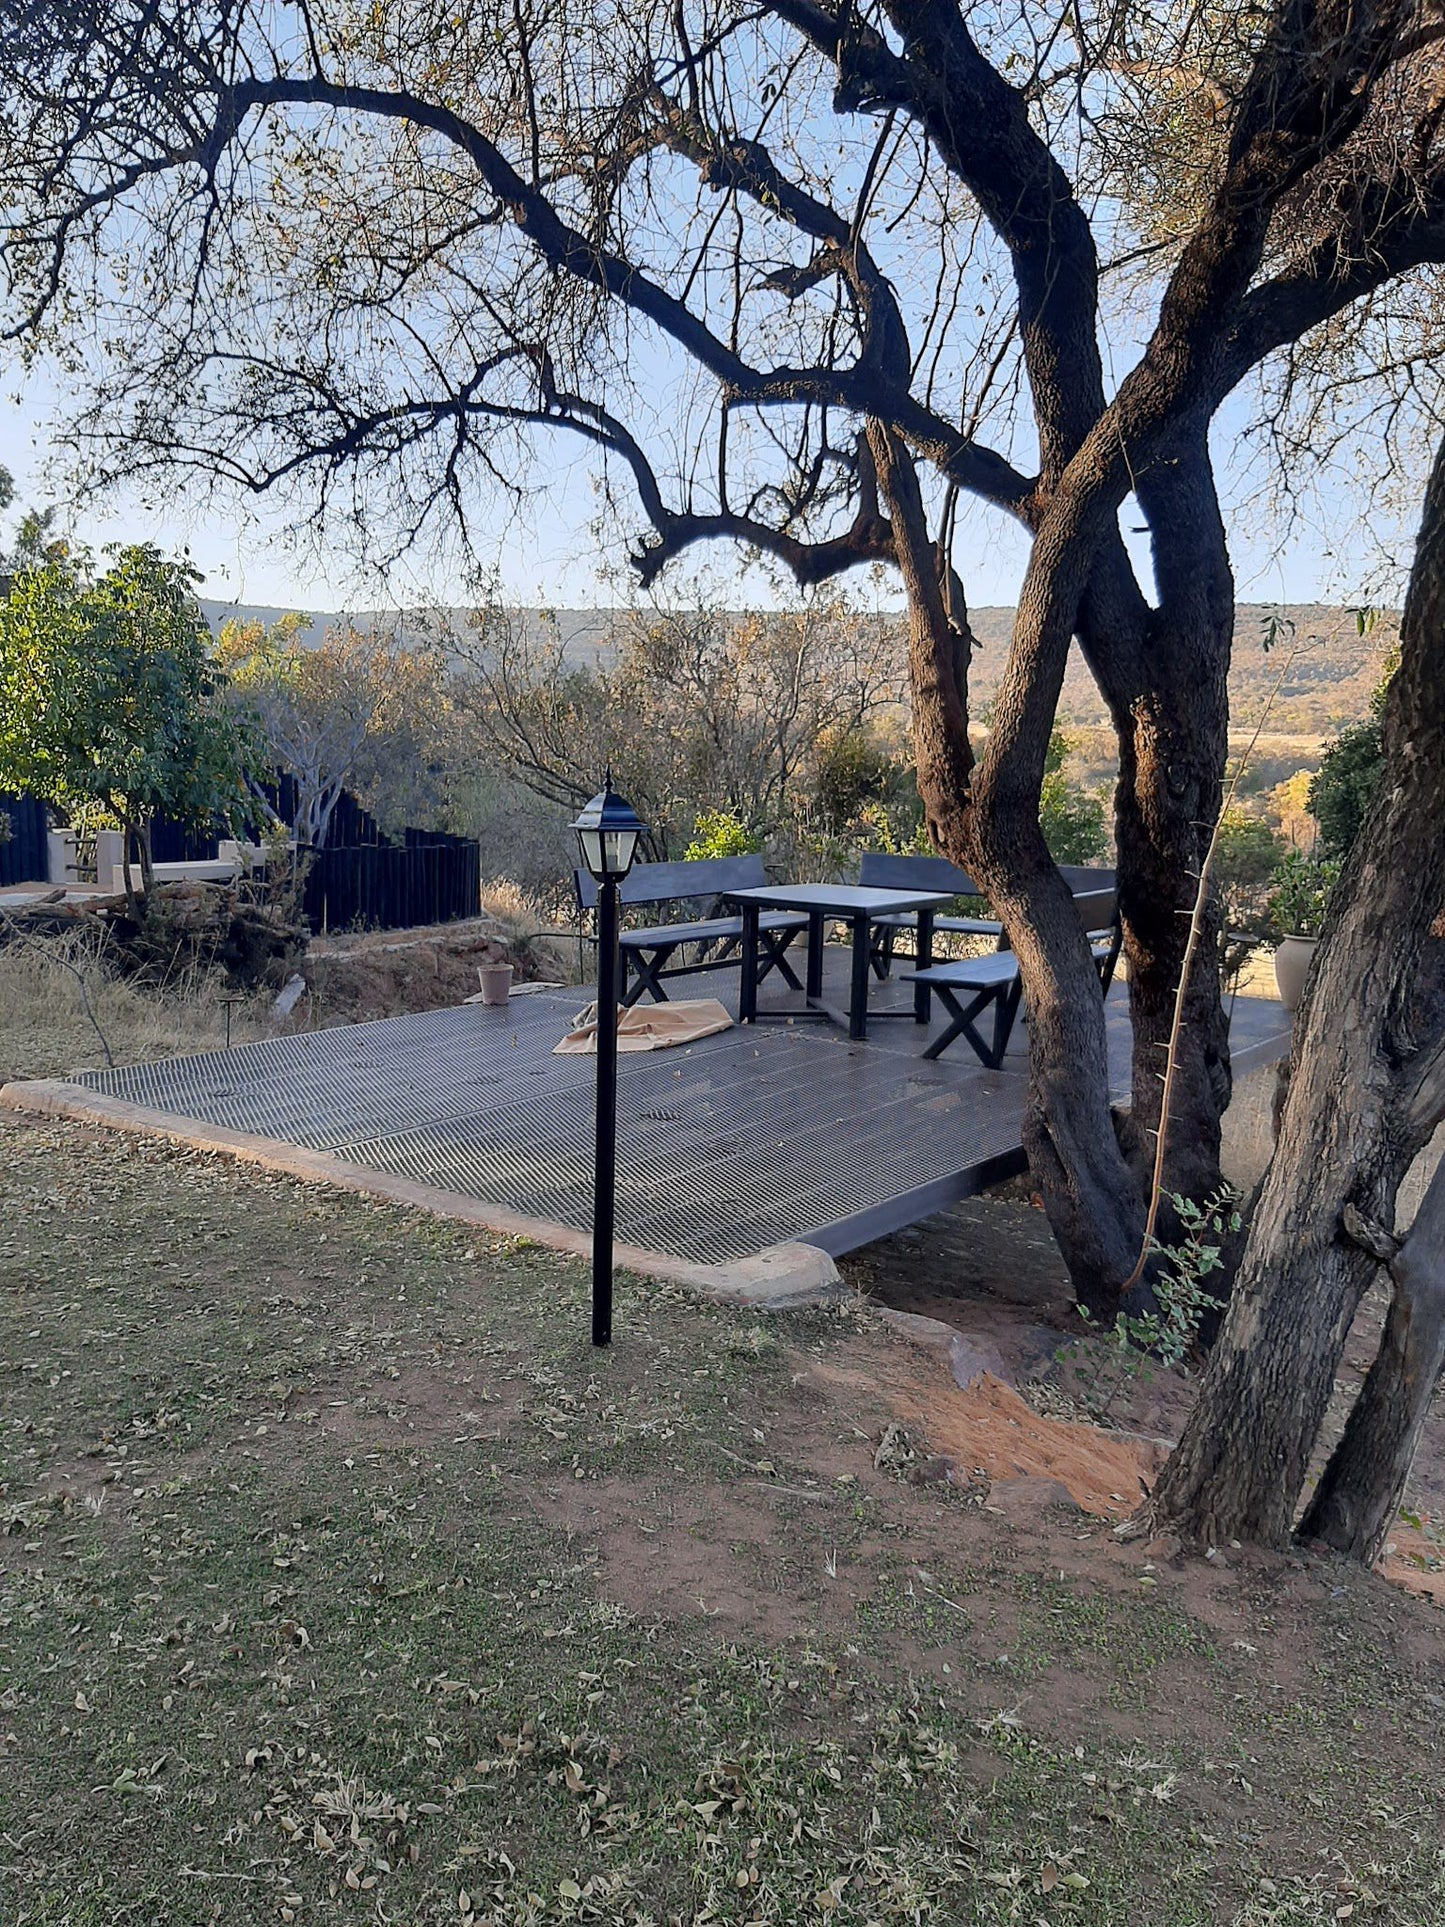 Ubumanzi Game Lodge Mookgopong Naboomspruit Limpopo Province South Africa 